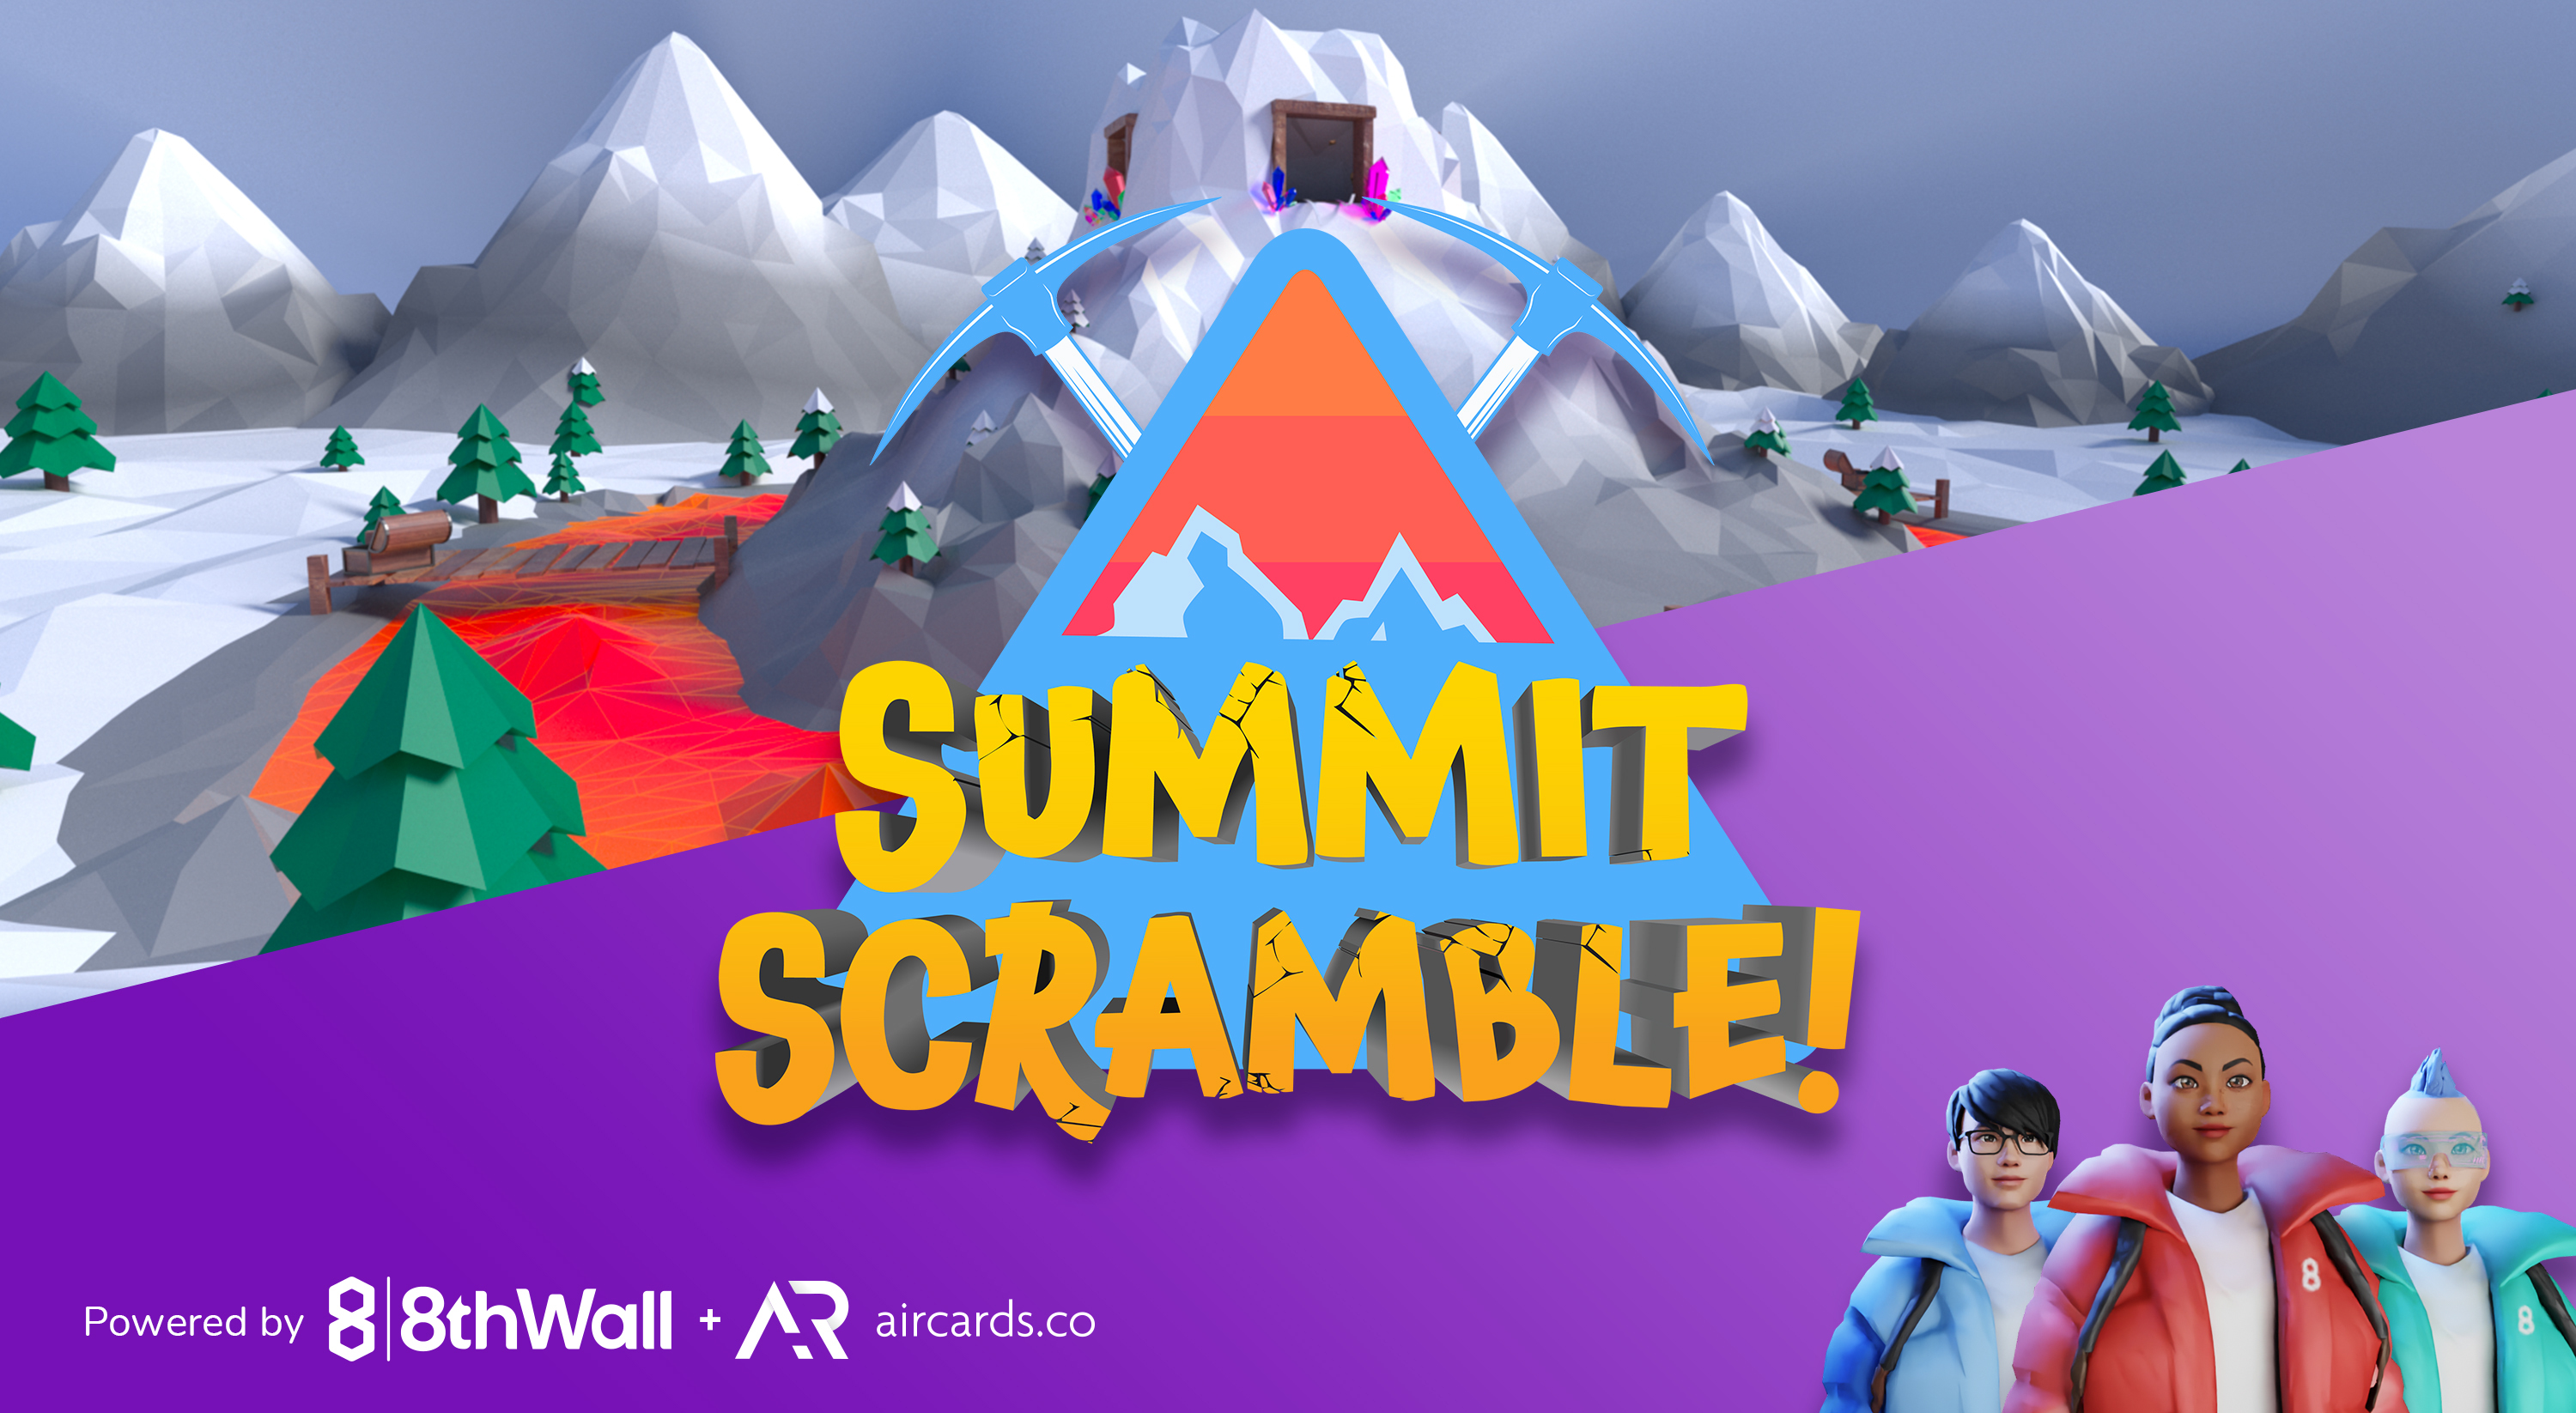 Introducing Summit Scramble, the world’s first immersive cross-platform web game